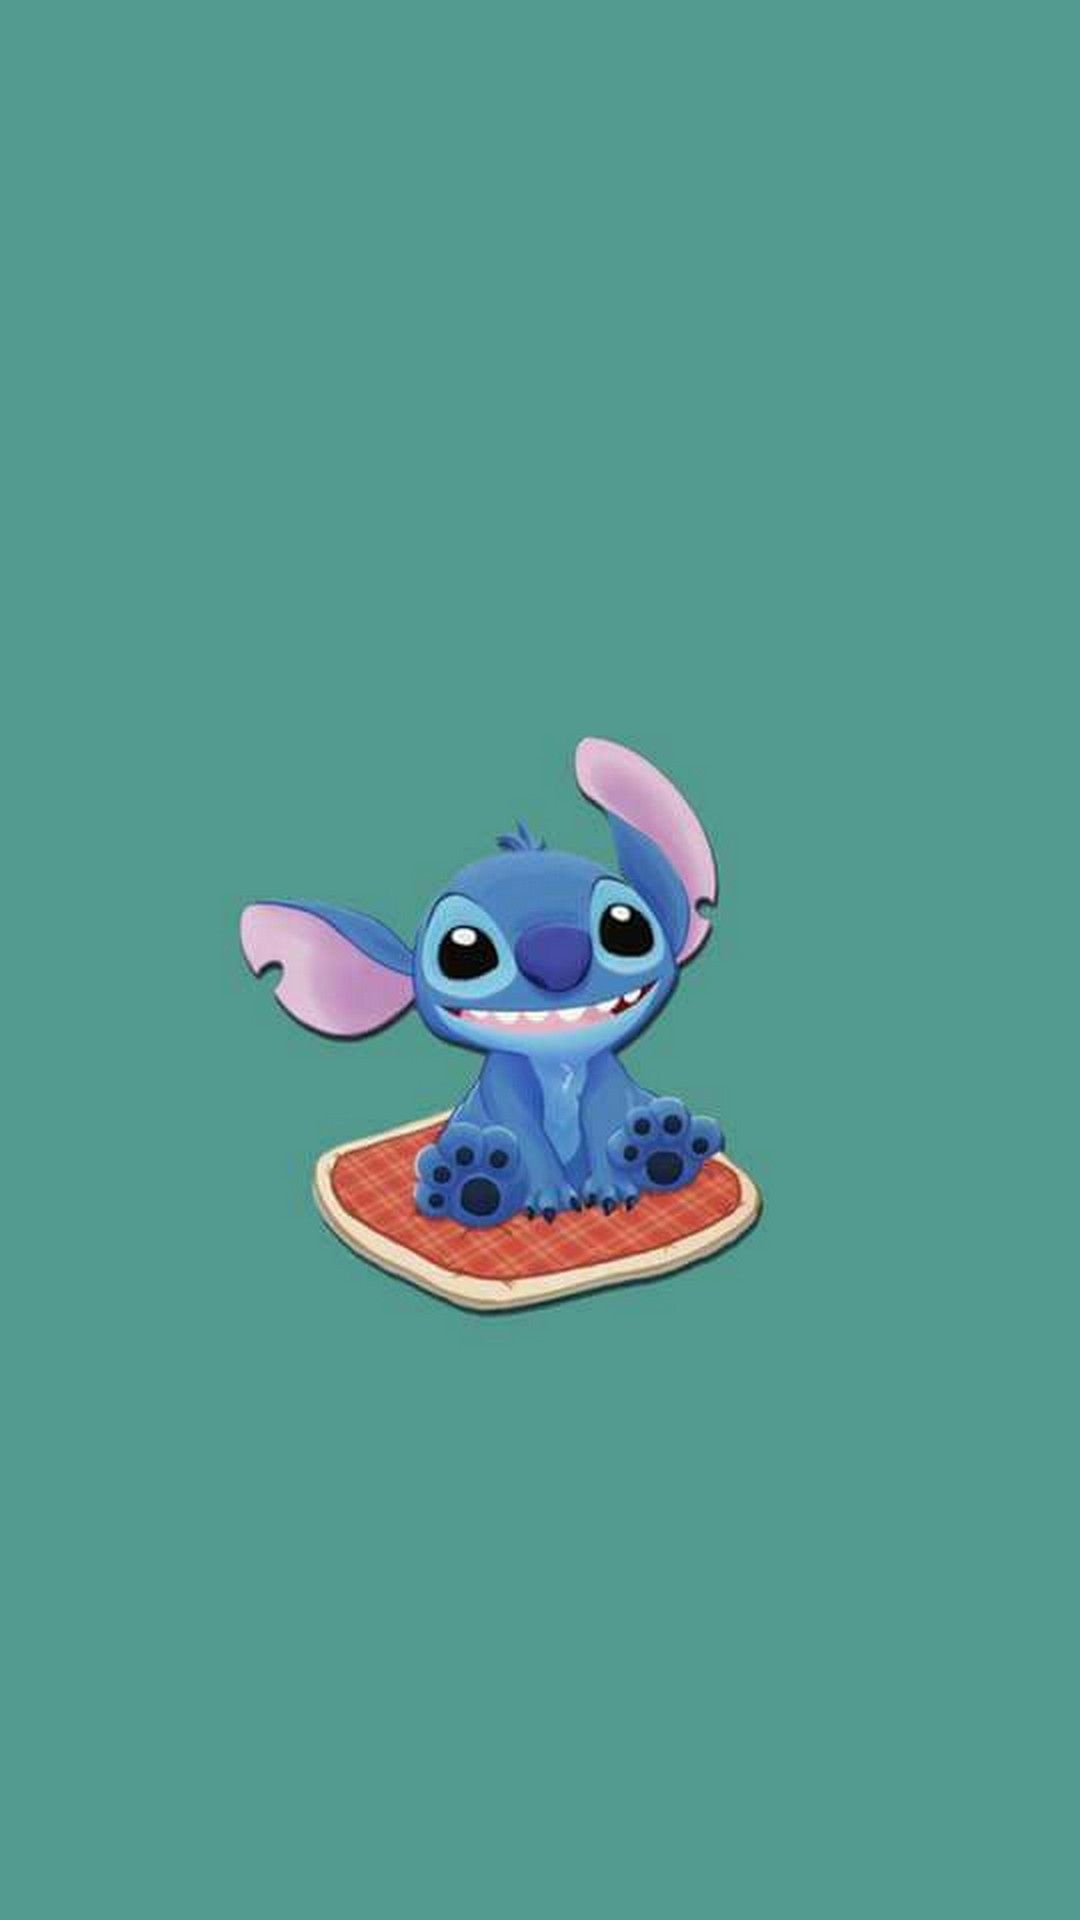 Wallpaper Stitch Disney Mobile. Best HD Wallpaper. Stitch disney, Cute disney wallpaper, Cute stitch